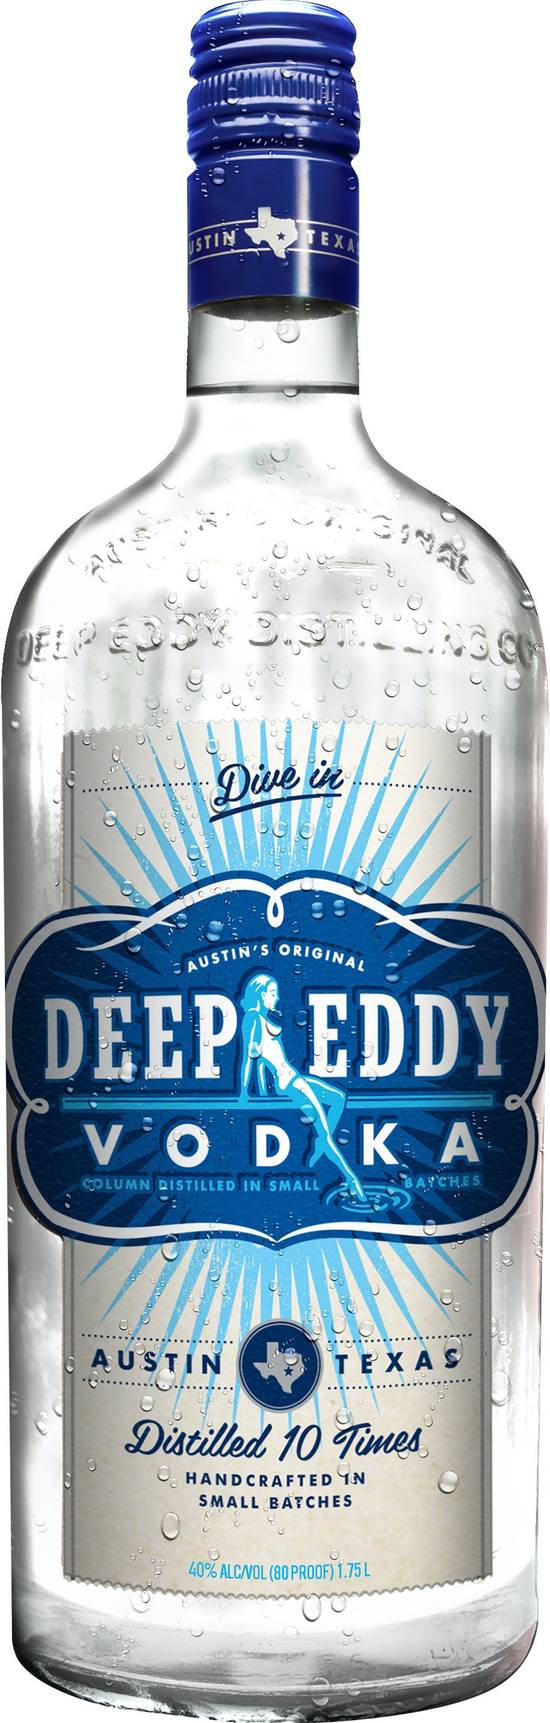 Deep Eddy Austin's Original Vodka (1.75 L)